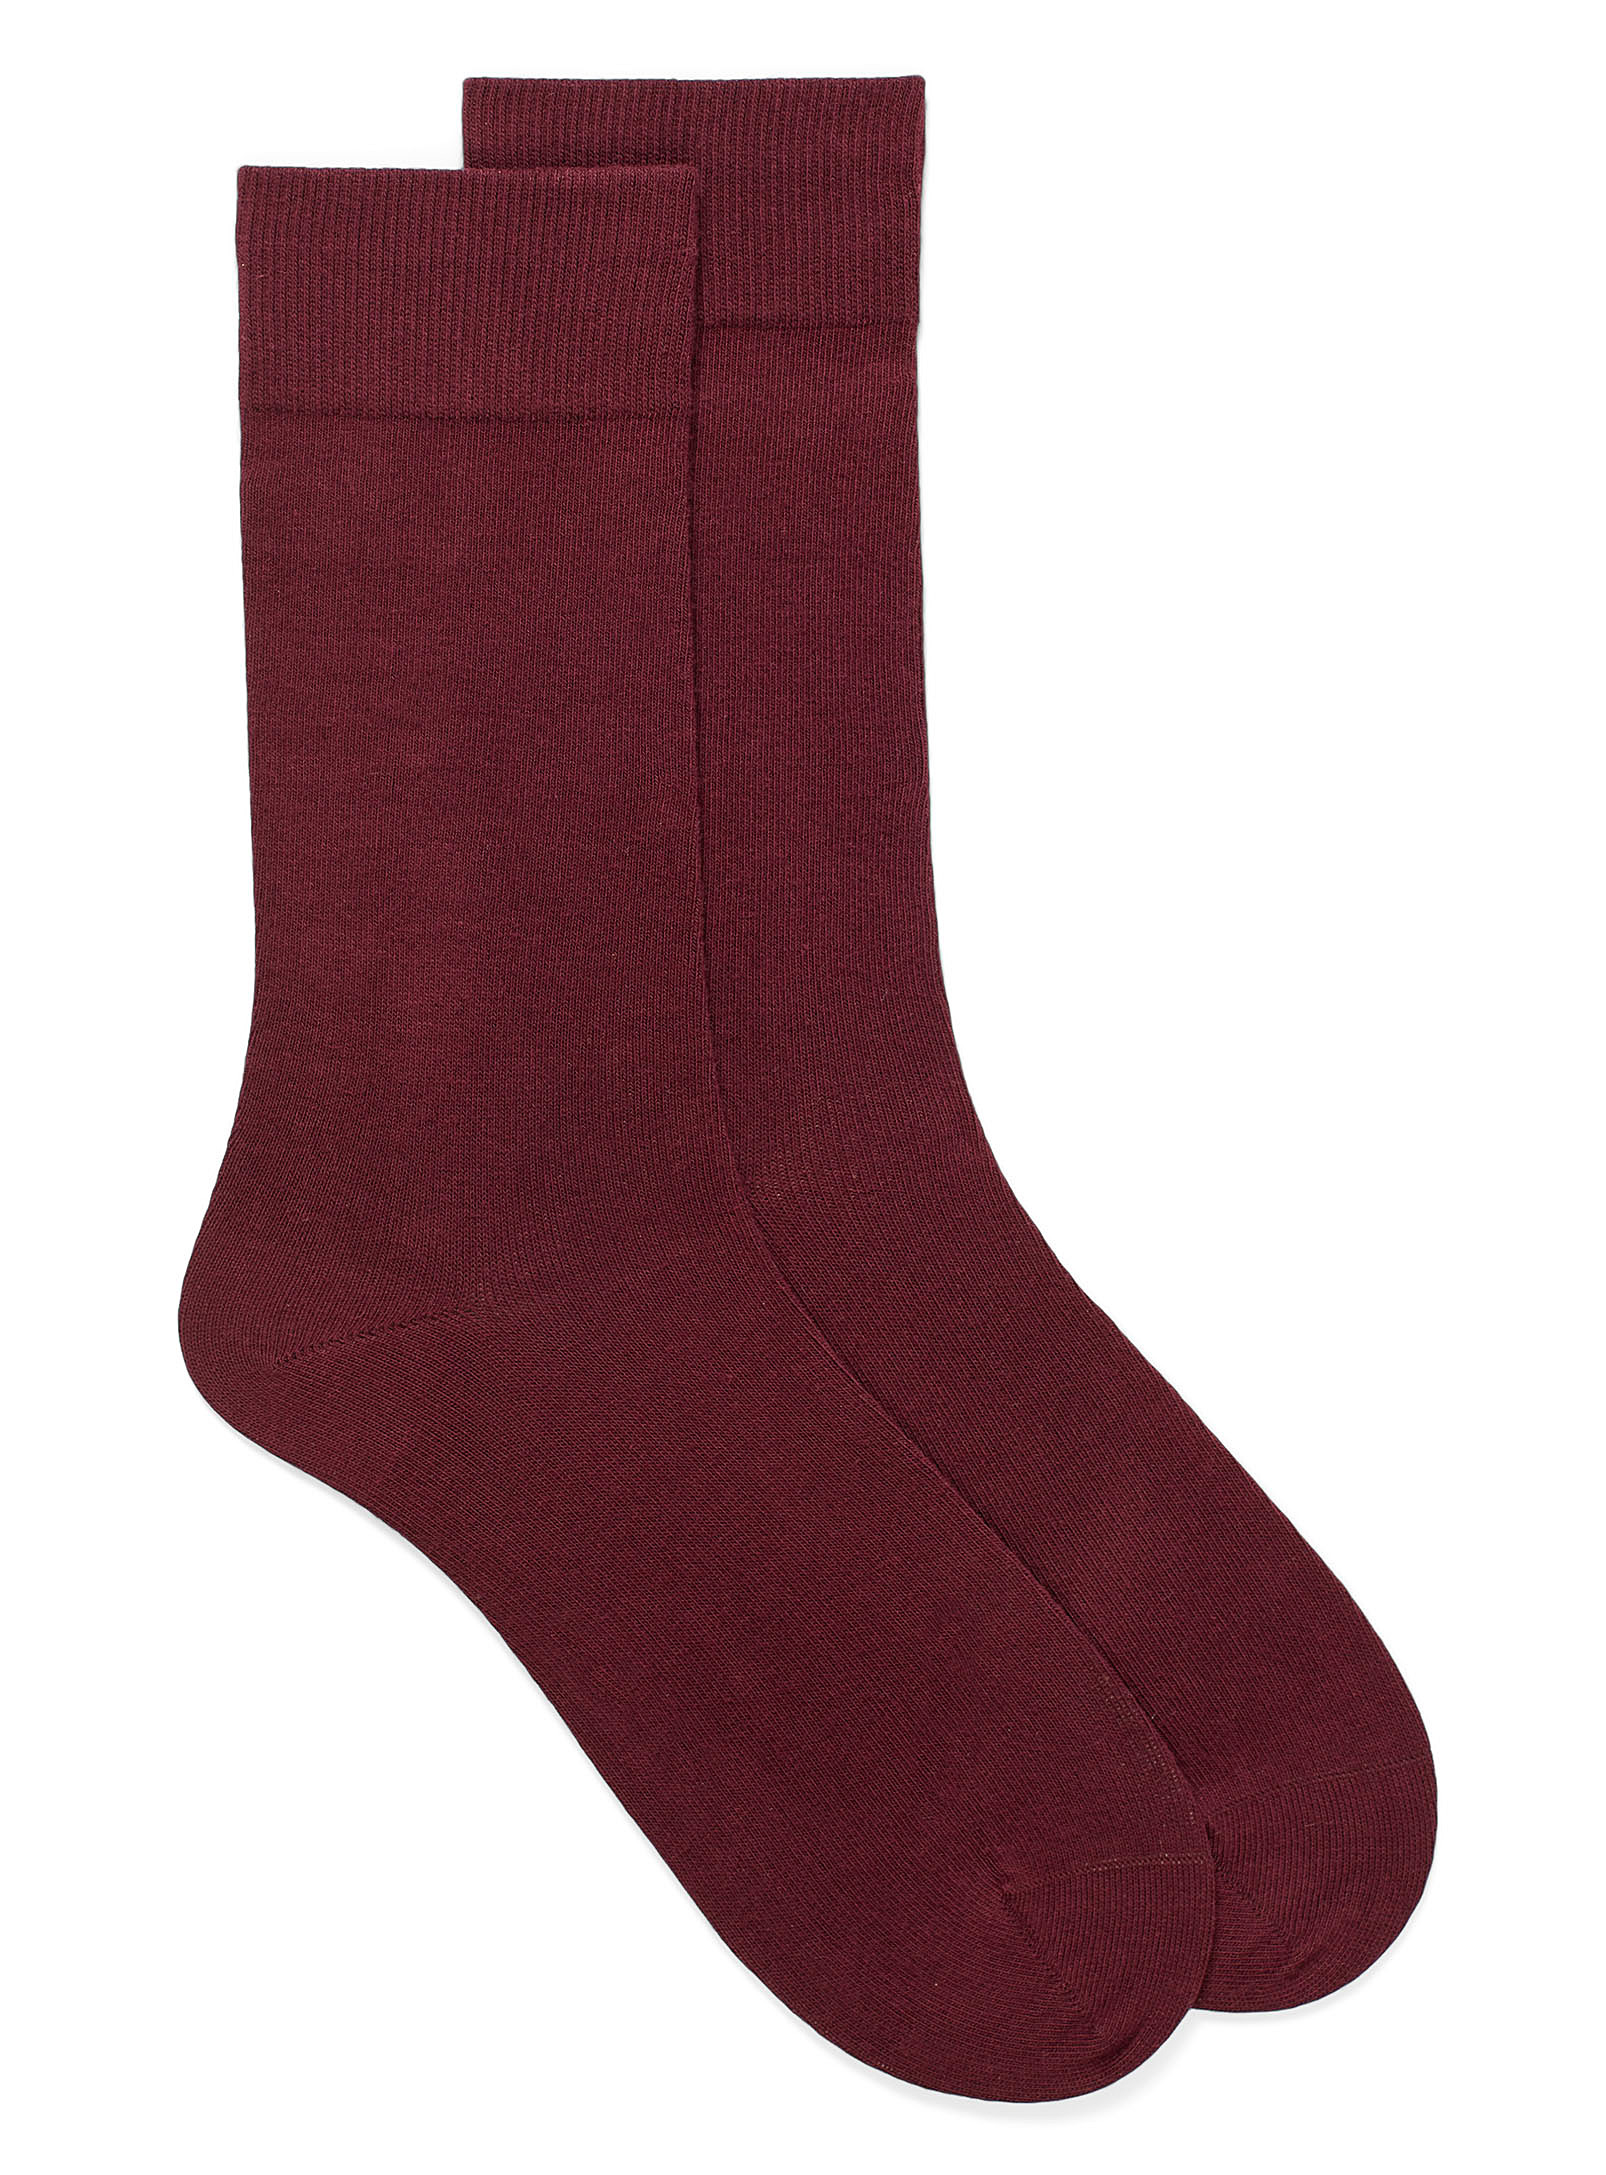 Le 31 Essential Organic Cotton Socks In Bright Red